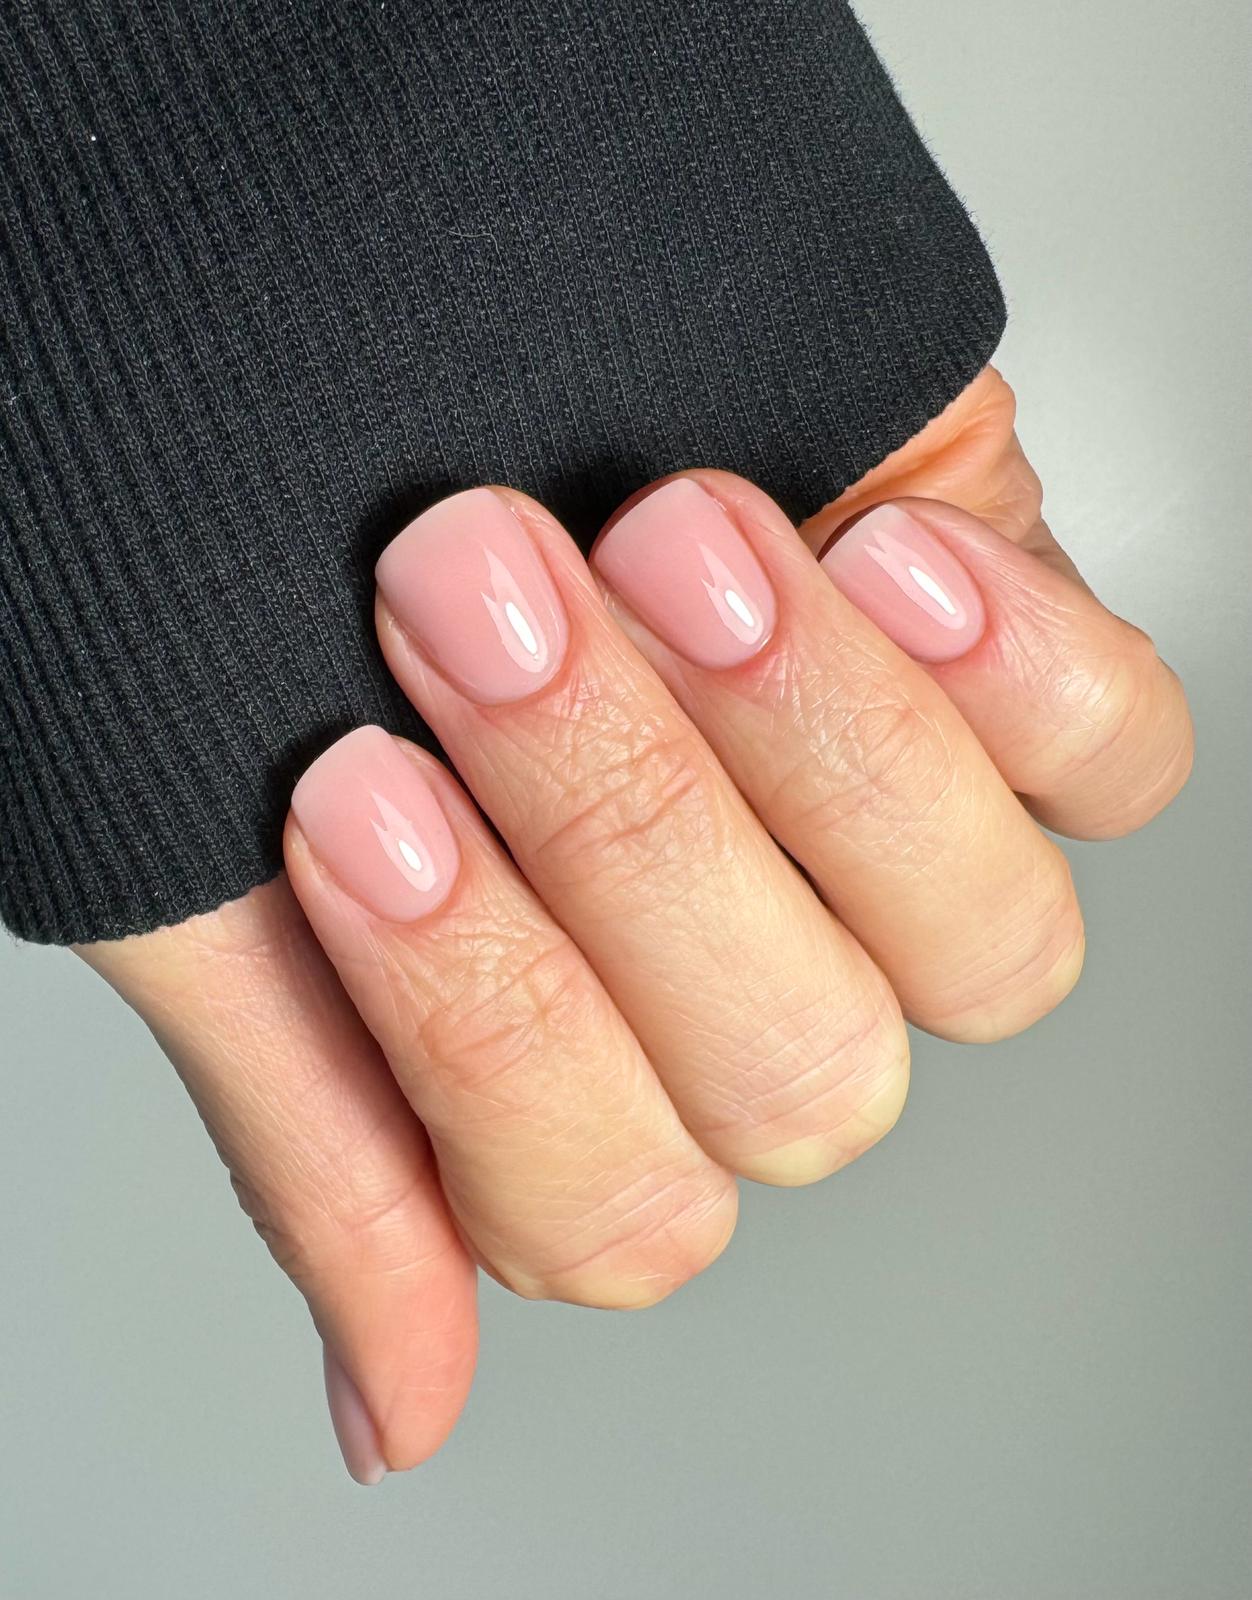 Neutral hard gel manicure, short nails, russian manicure, structured manicure